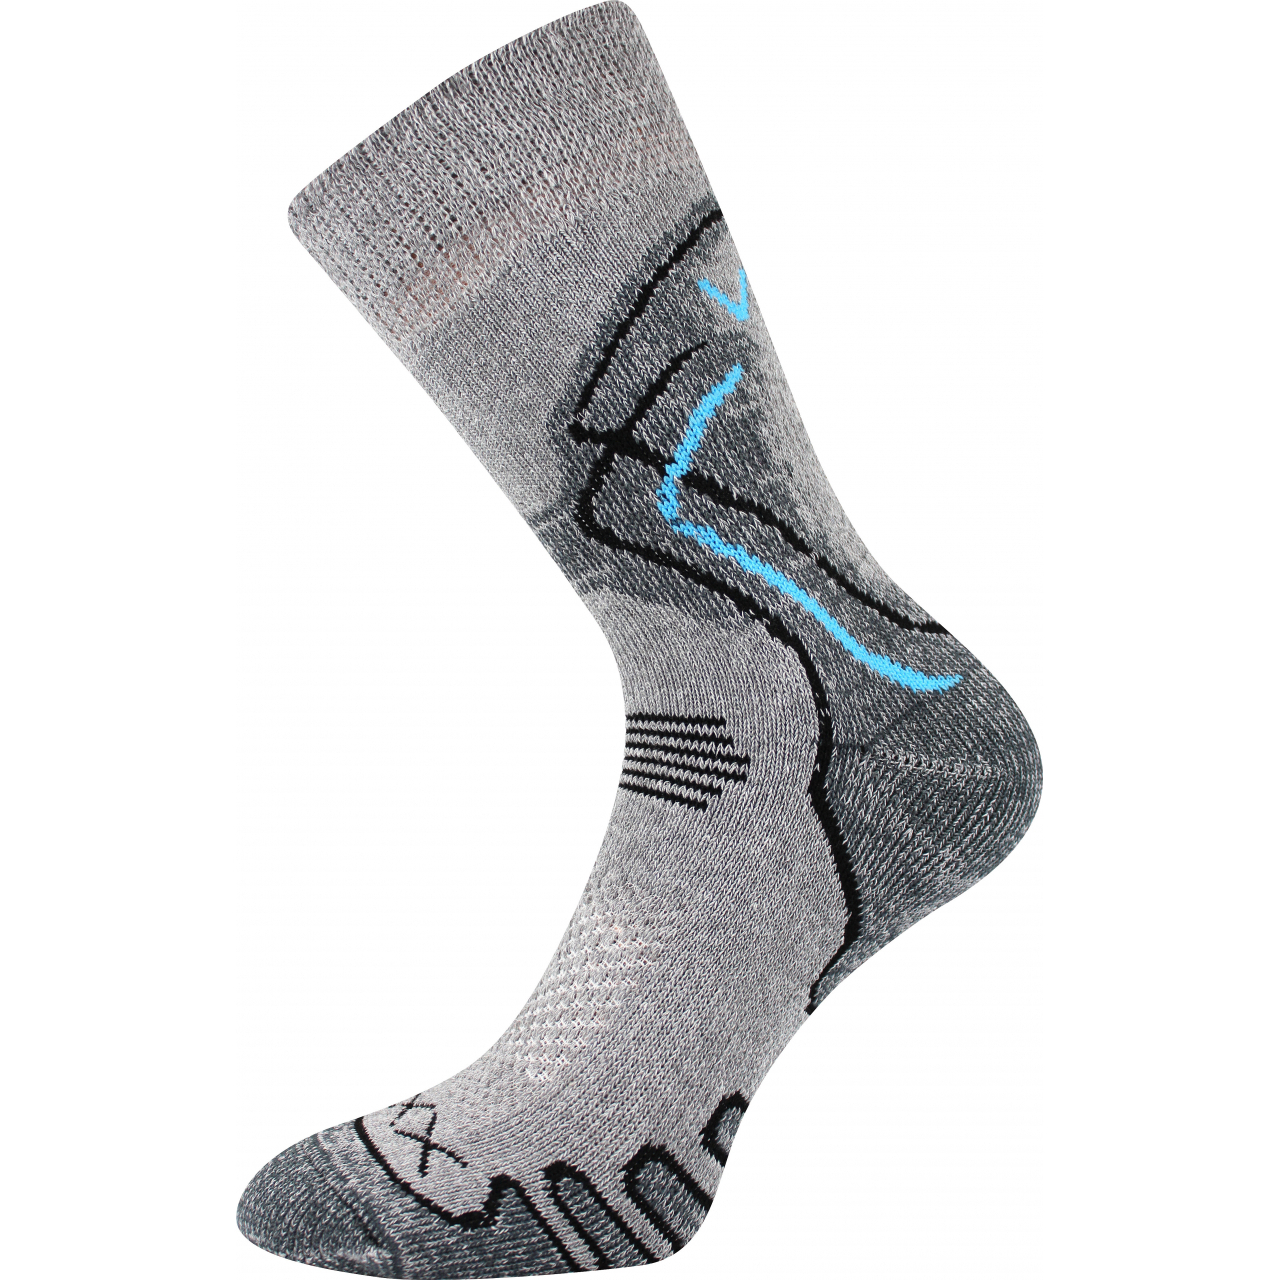 Ponožky trekingové unisex Voxx Limit III - šedé, 39-42